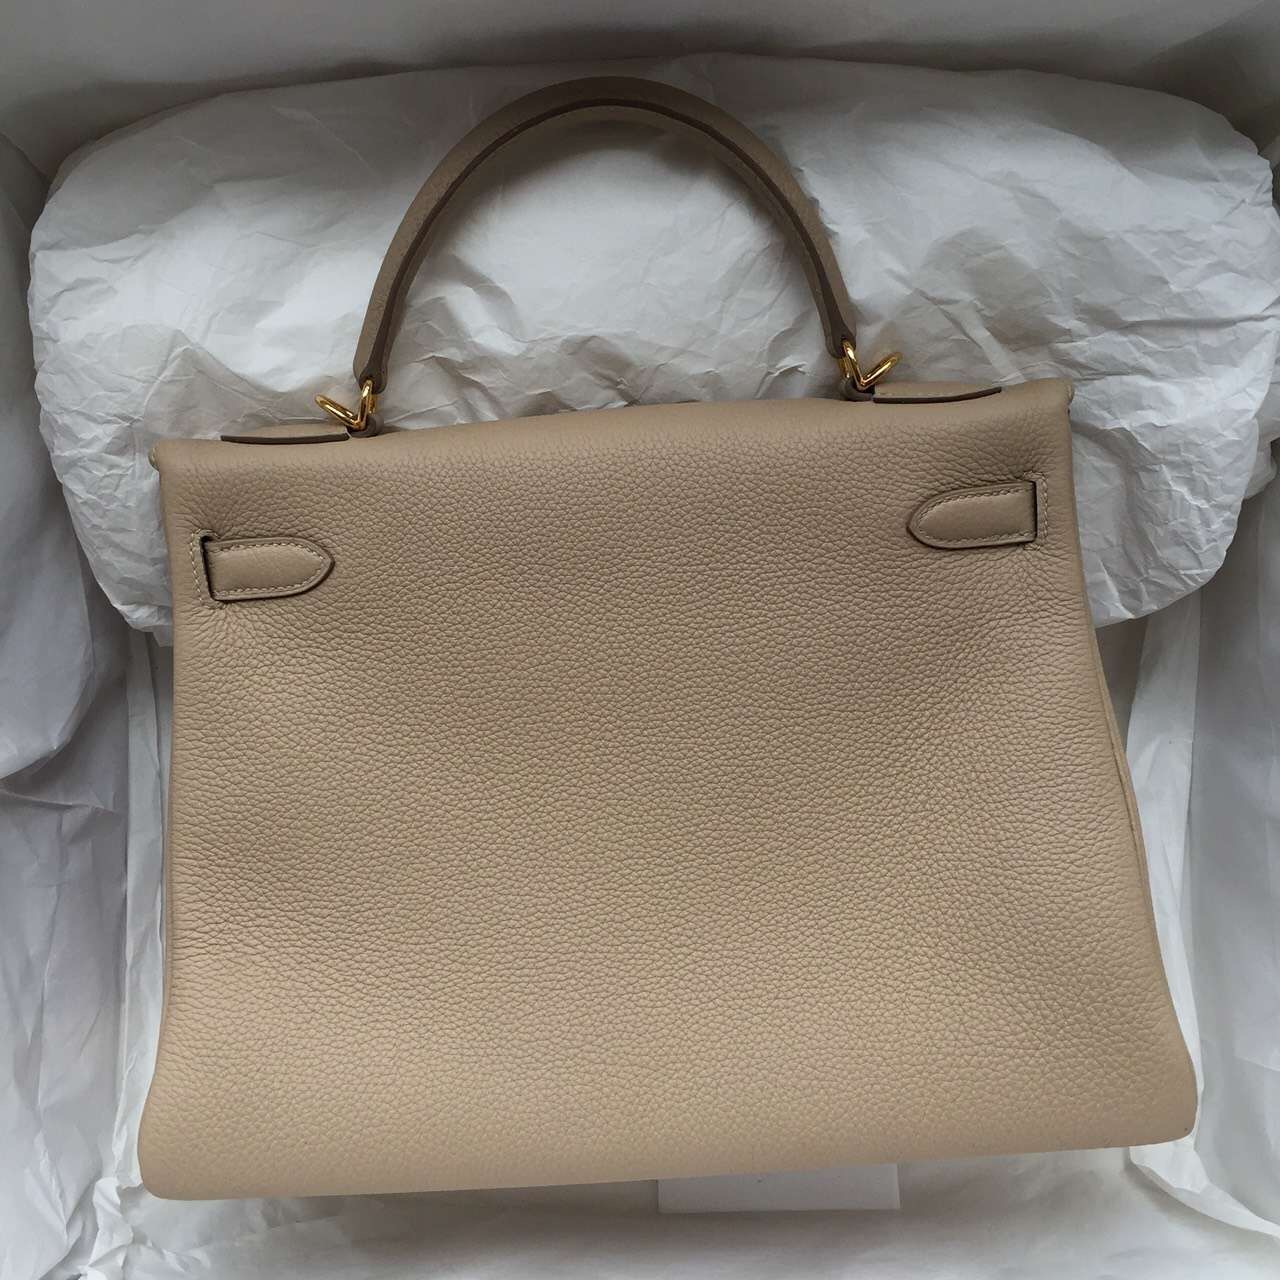 Cheap Hermes Kelly Bag Diamond Gray Togo Calfskin Leather Handbag 32CM